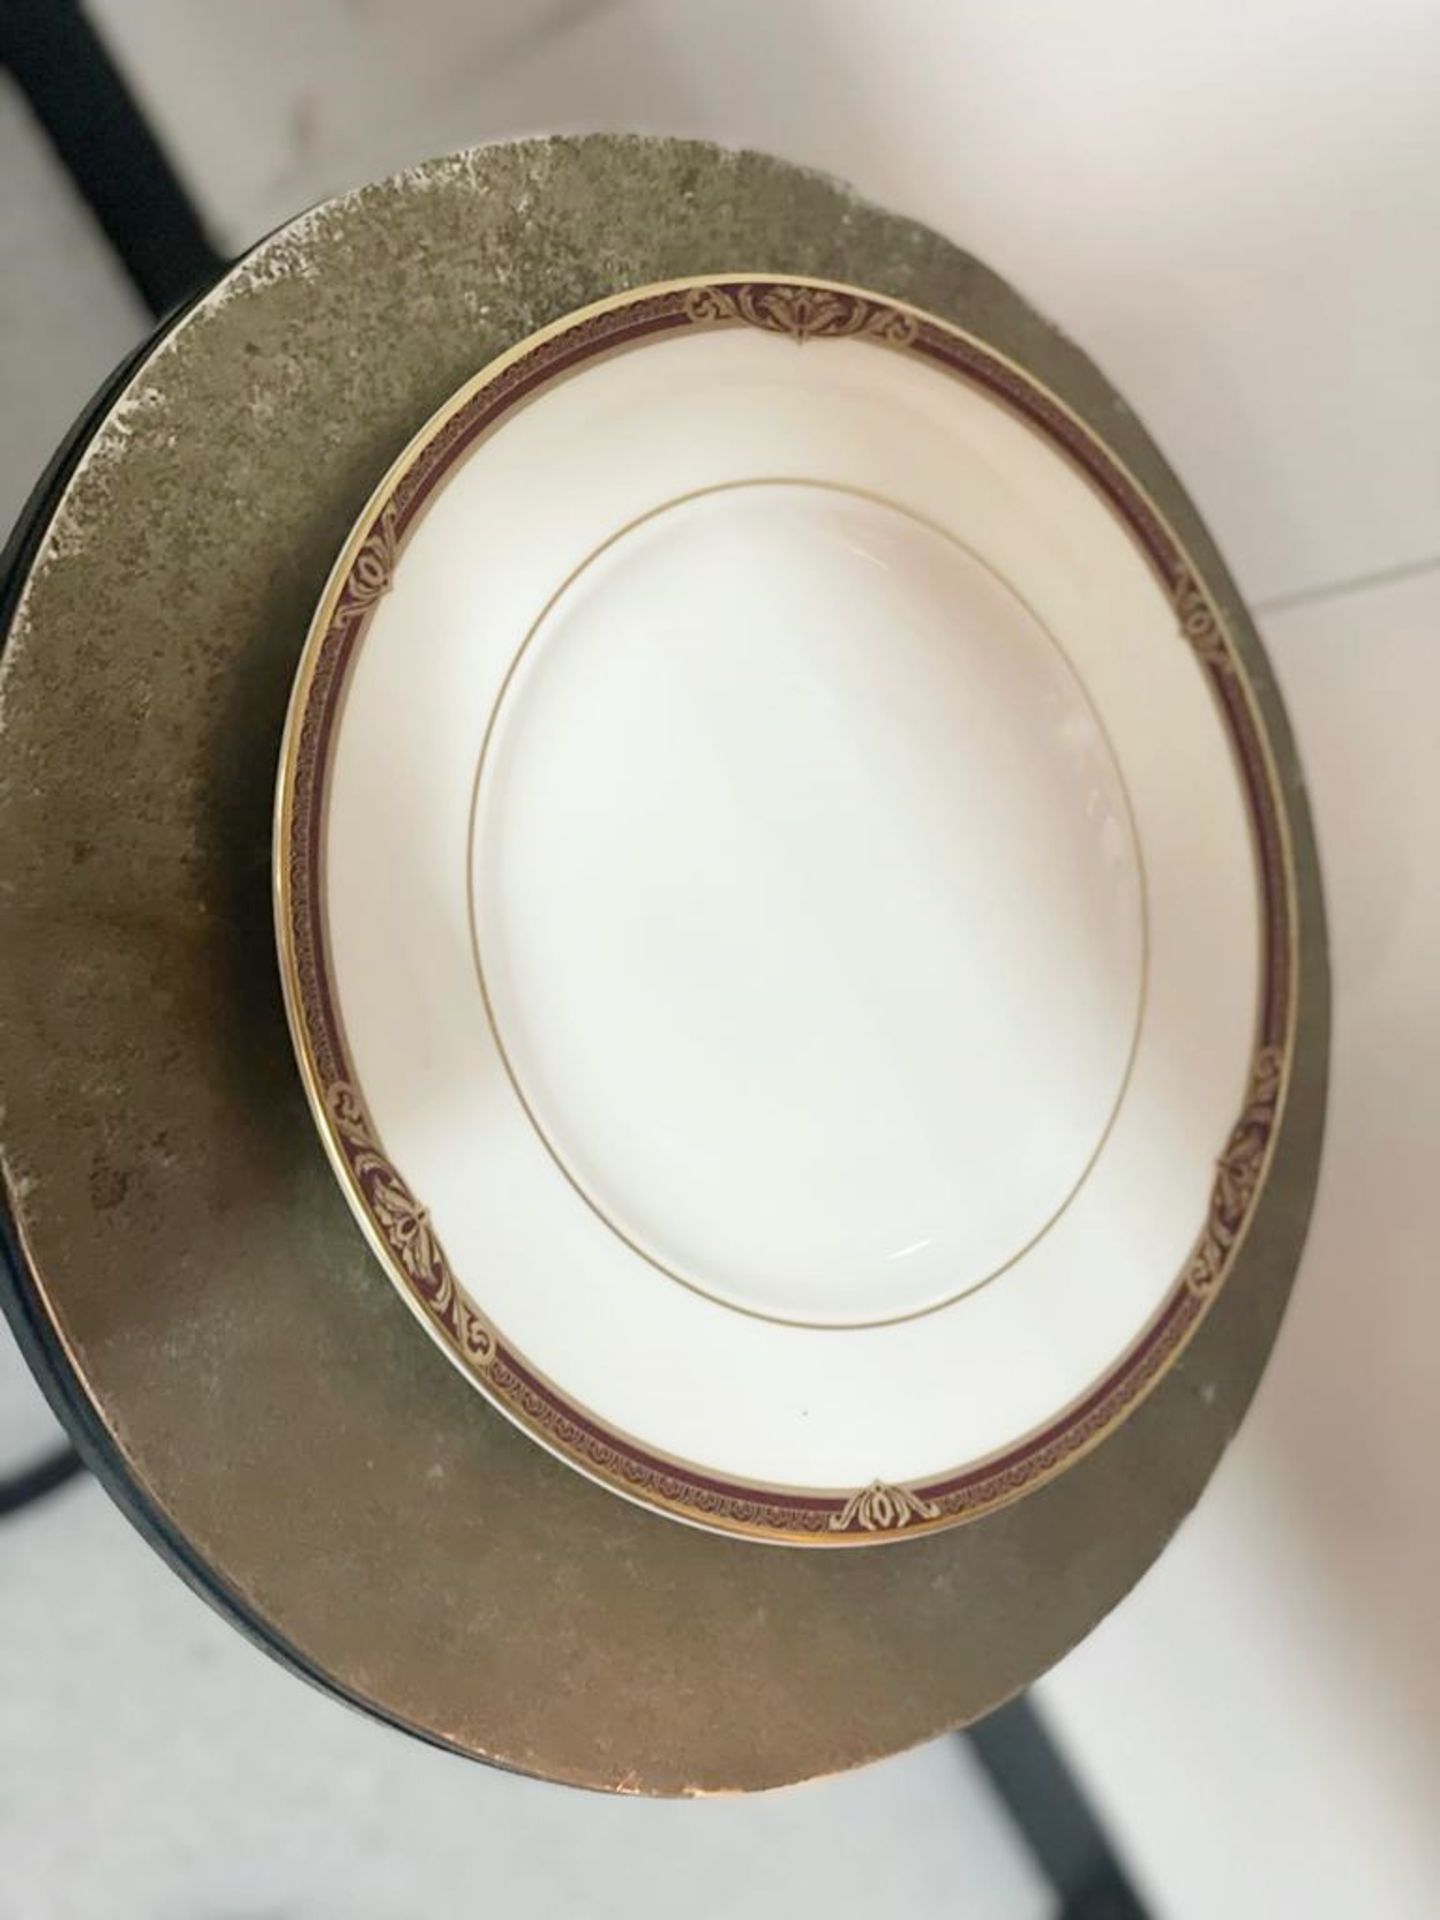 1 x Tennyson Royal Doulton Set Of Plates - Ref: AUR127 - CL652 - Location: Altrincham WA14 16 x